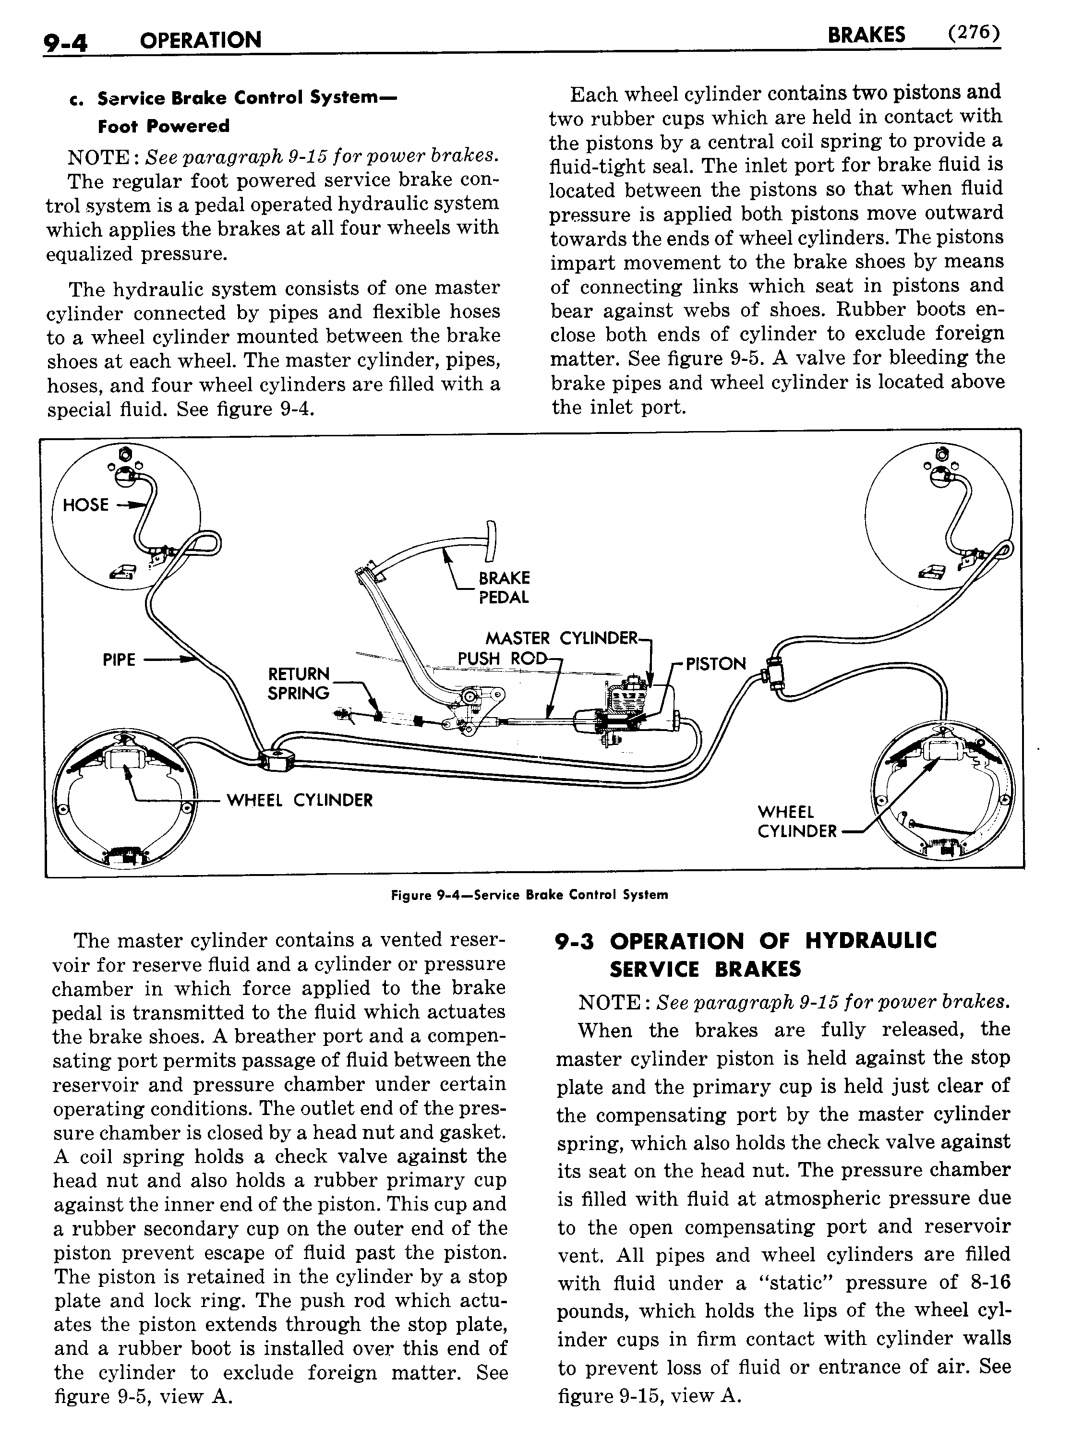 n_10 1955 Buick Shop Manual - Brakes-004-004.jpg